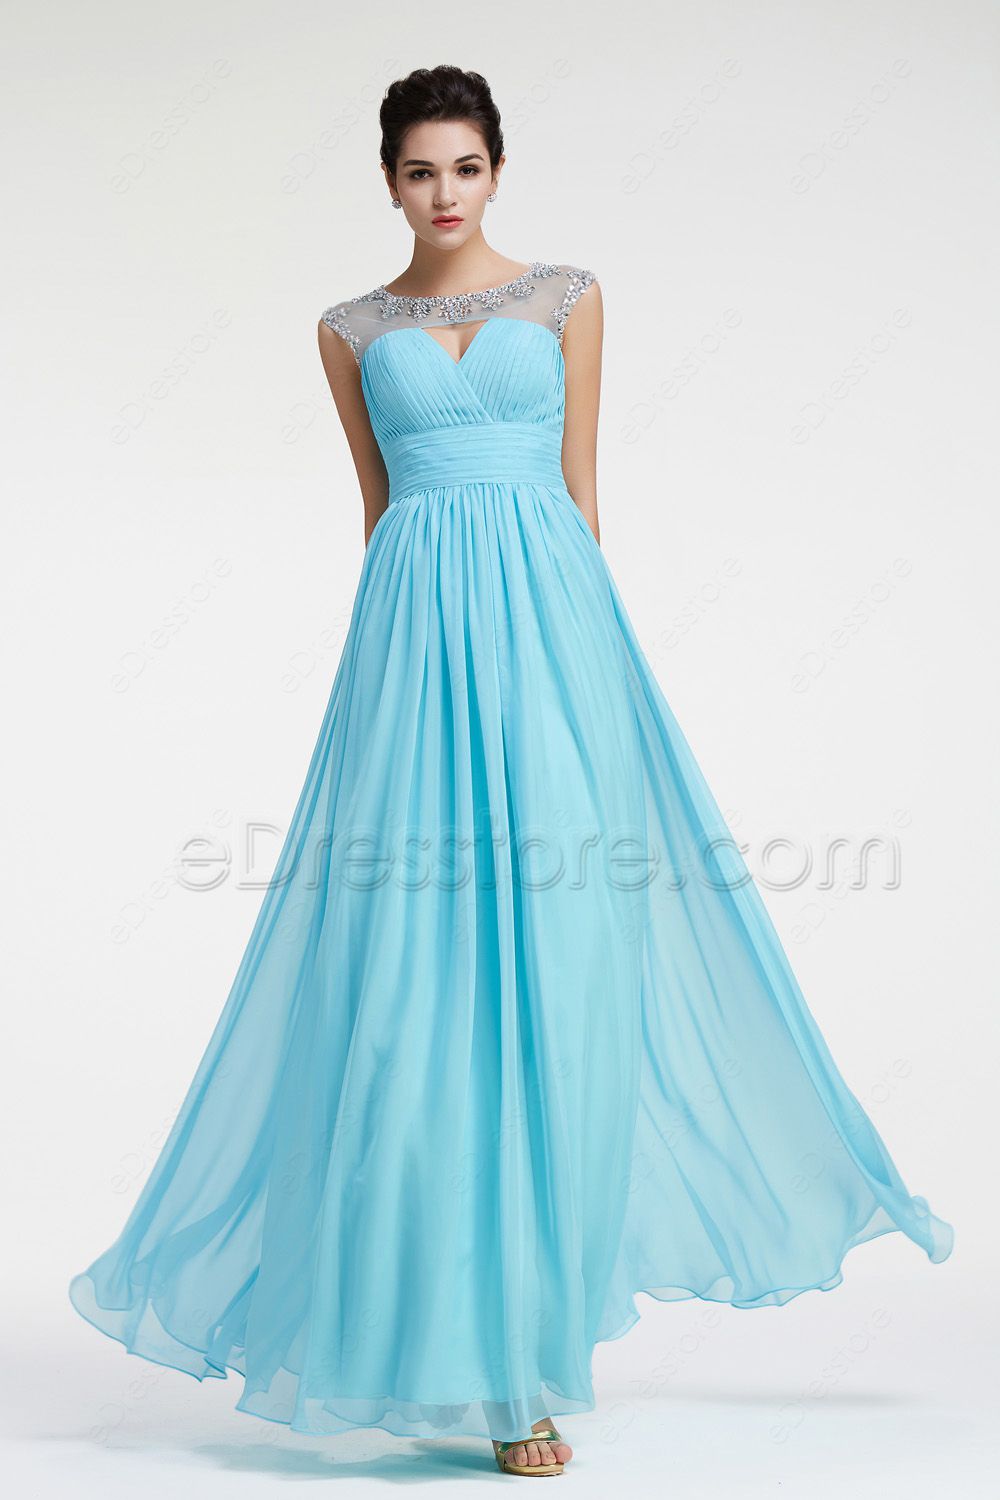 Light Blue Crystal Prom Dresses Long with Cap Sleeves | eDresstore